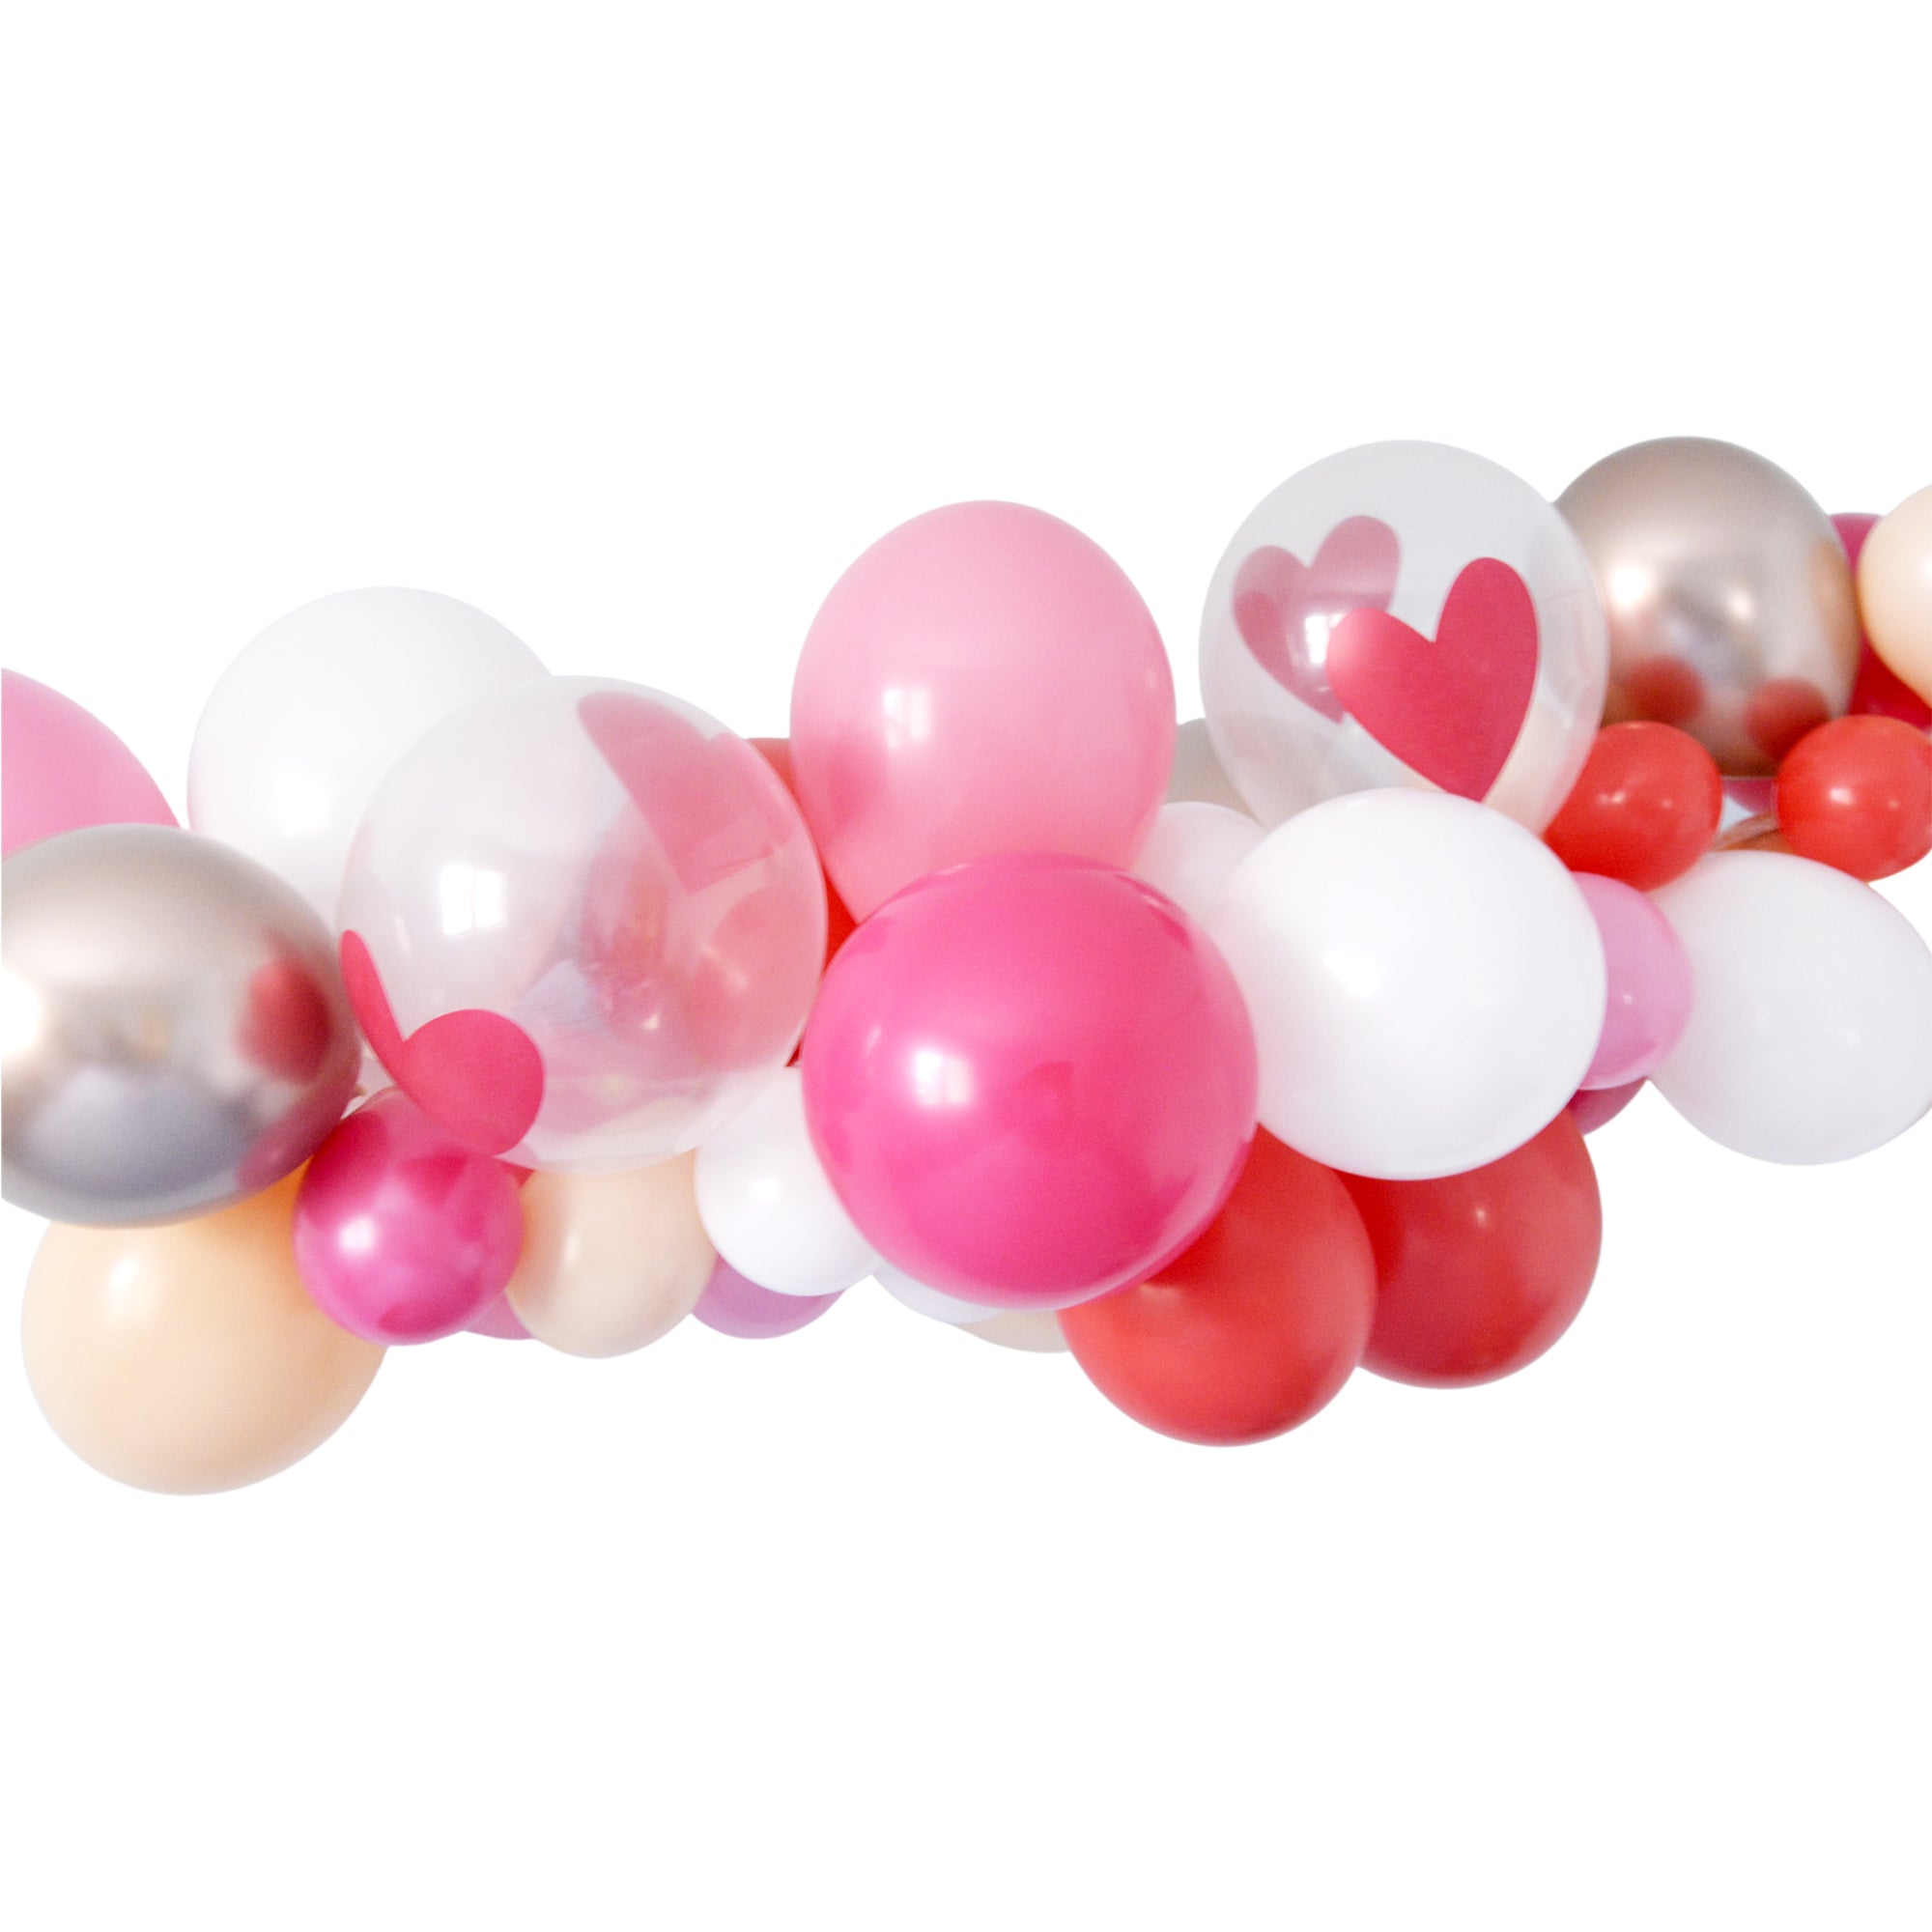 Romantic Valentine Balloon Garland Kit